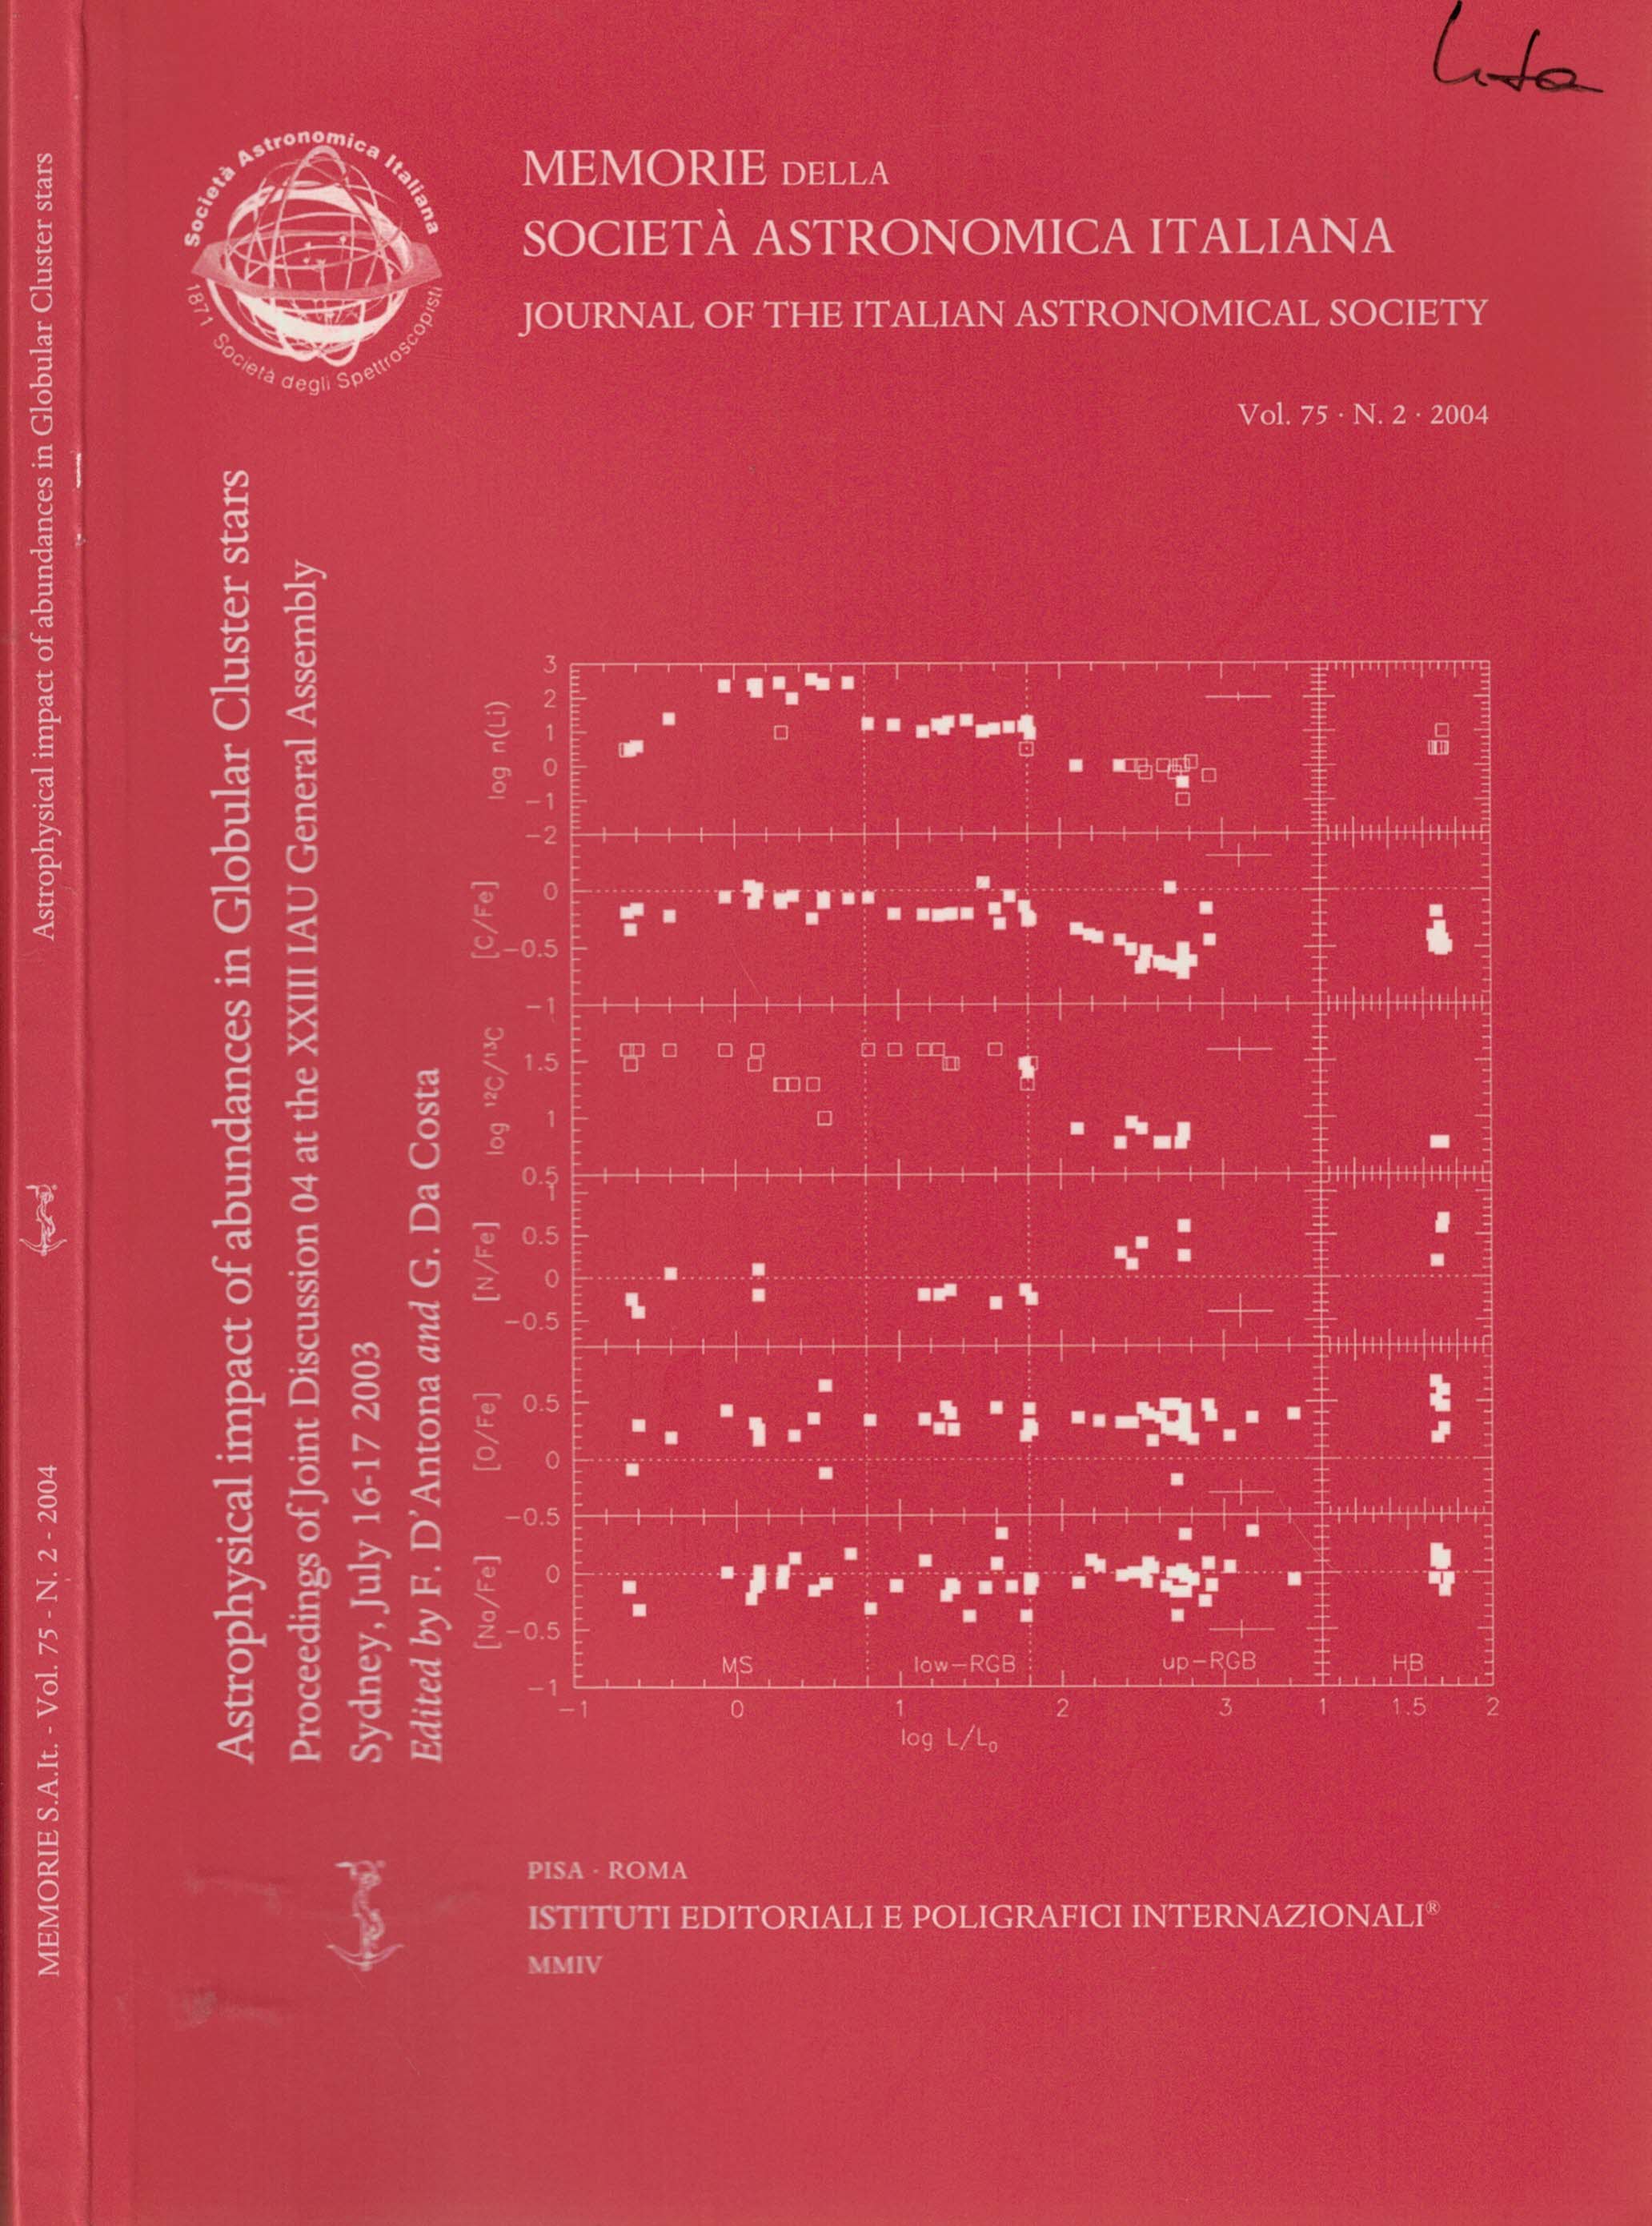 Astrophysical Impact of Abundances in Globular Cluster Stars. Memorie della Societ Astronomica Italiana / Journal of the Italian Astronomical Society. Volume 75, Number 2, 2004.